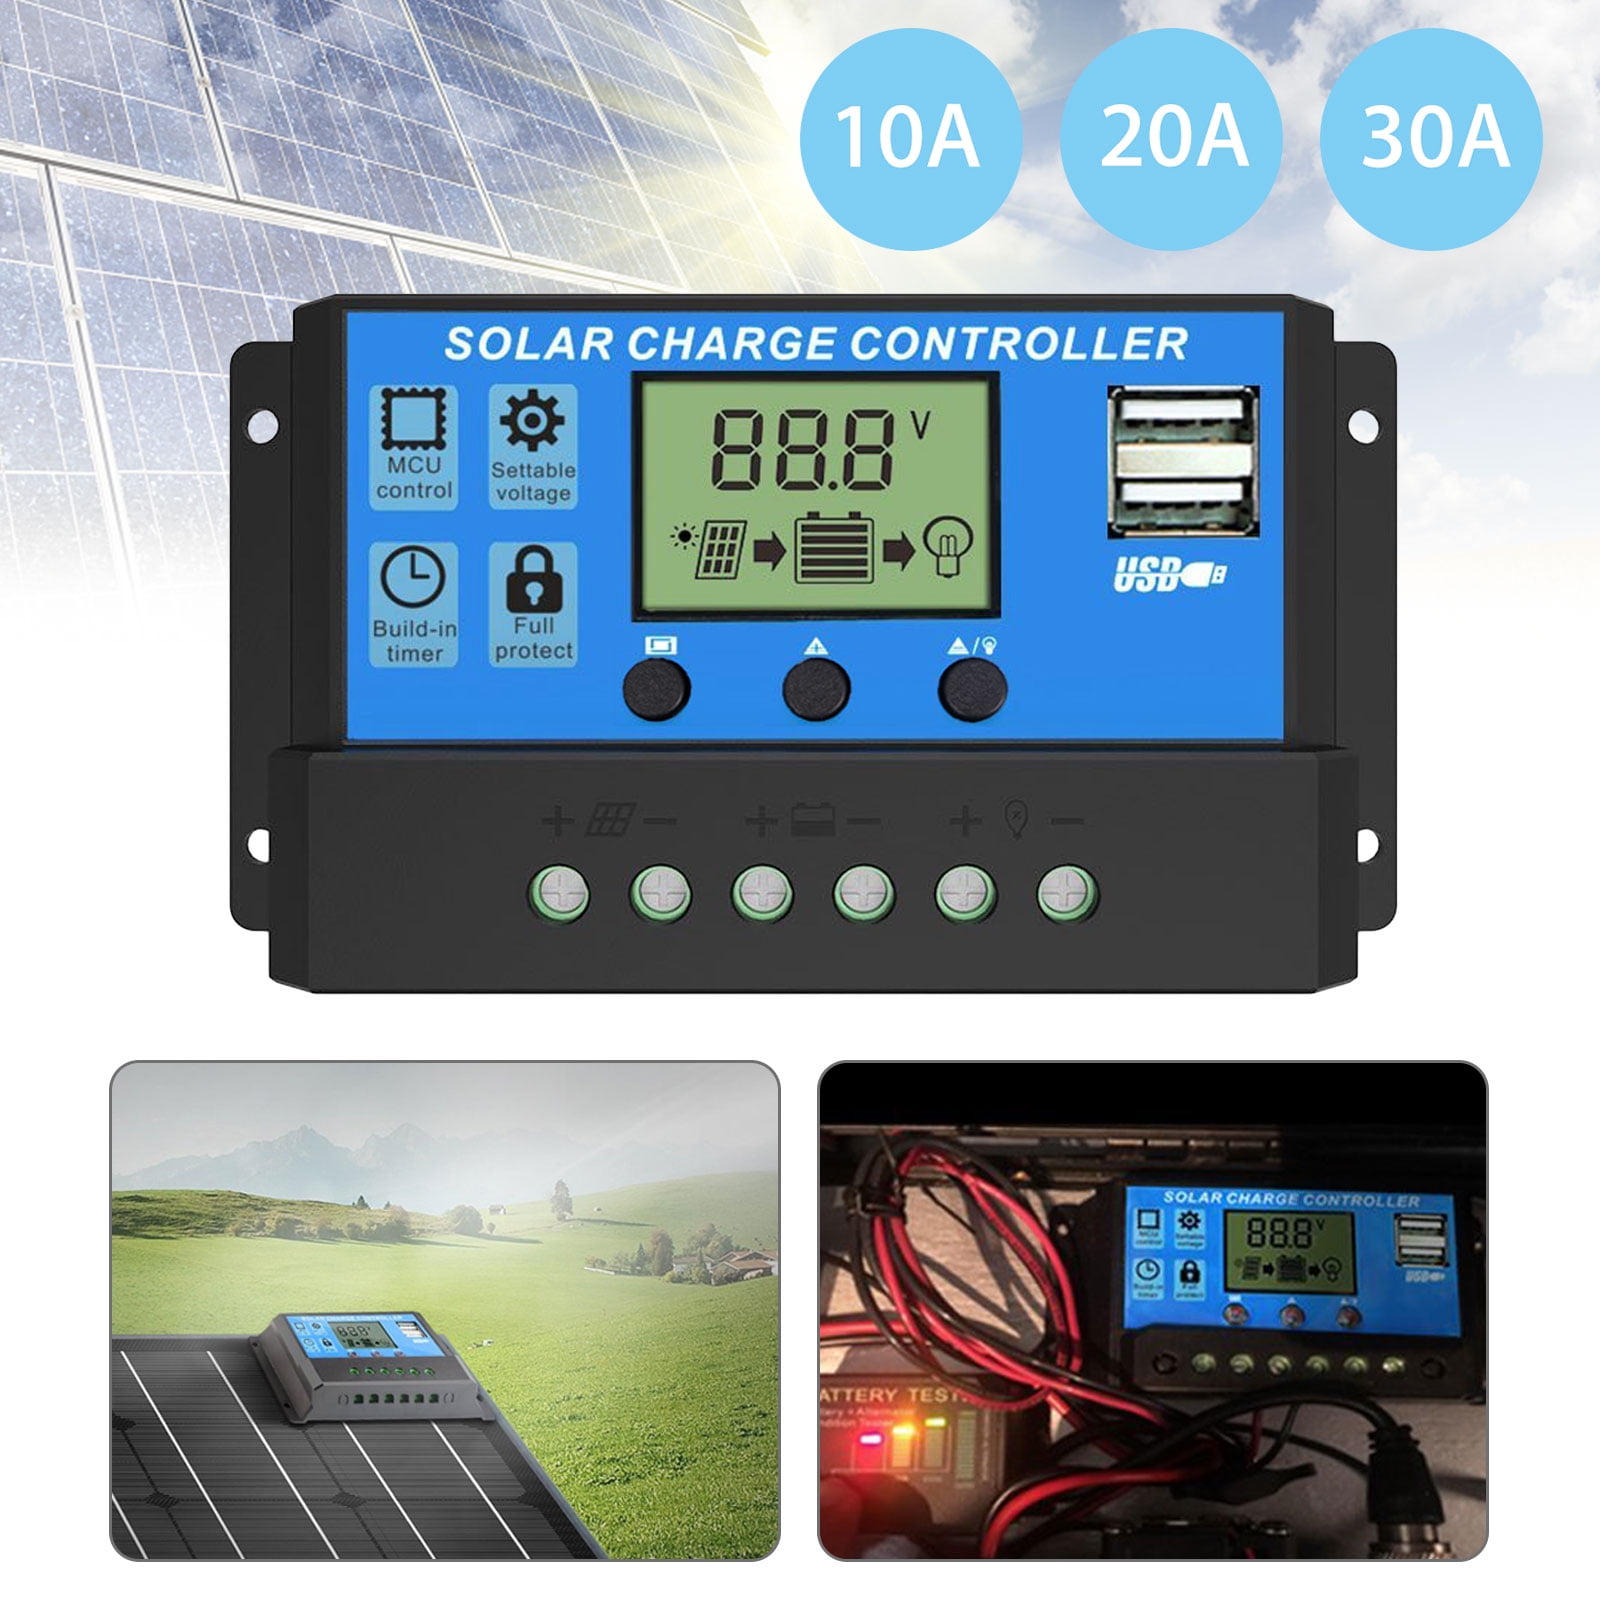 USA 30A Solar Charger Controller Panel Battery Intelligent Regulator Industrial 